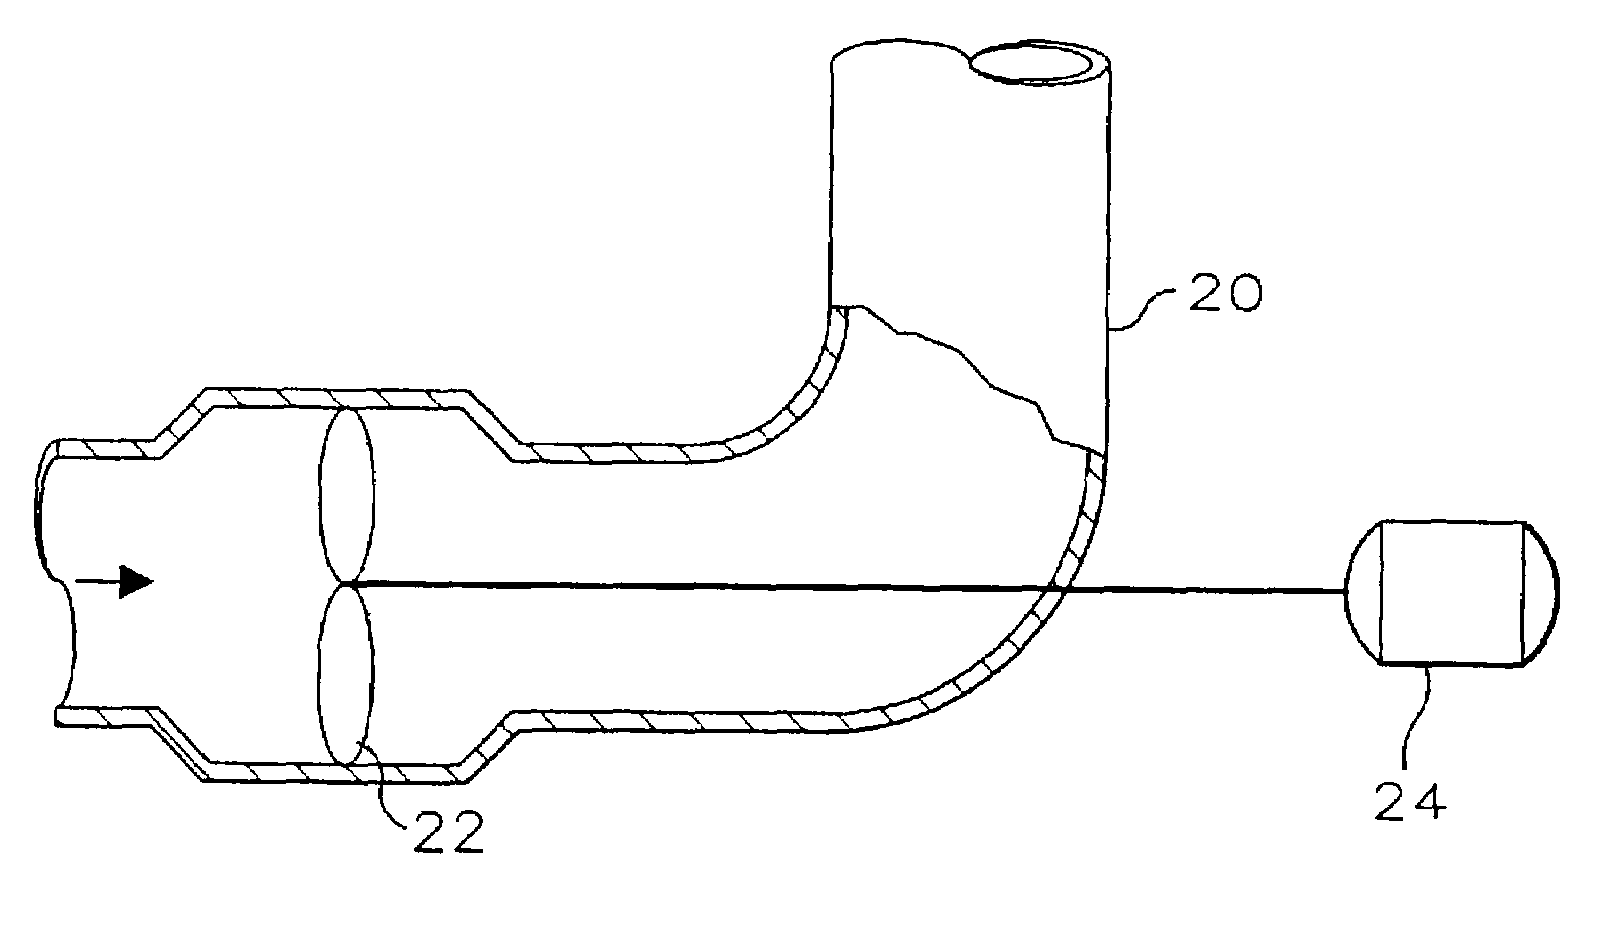 Slurry polymerization reactor having large length/diameter ratio